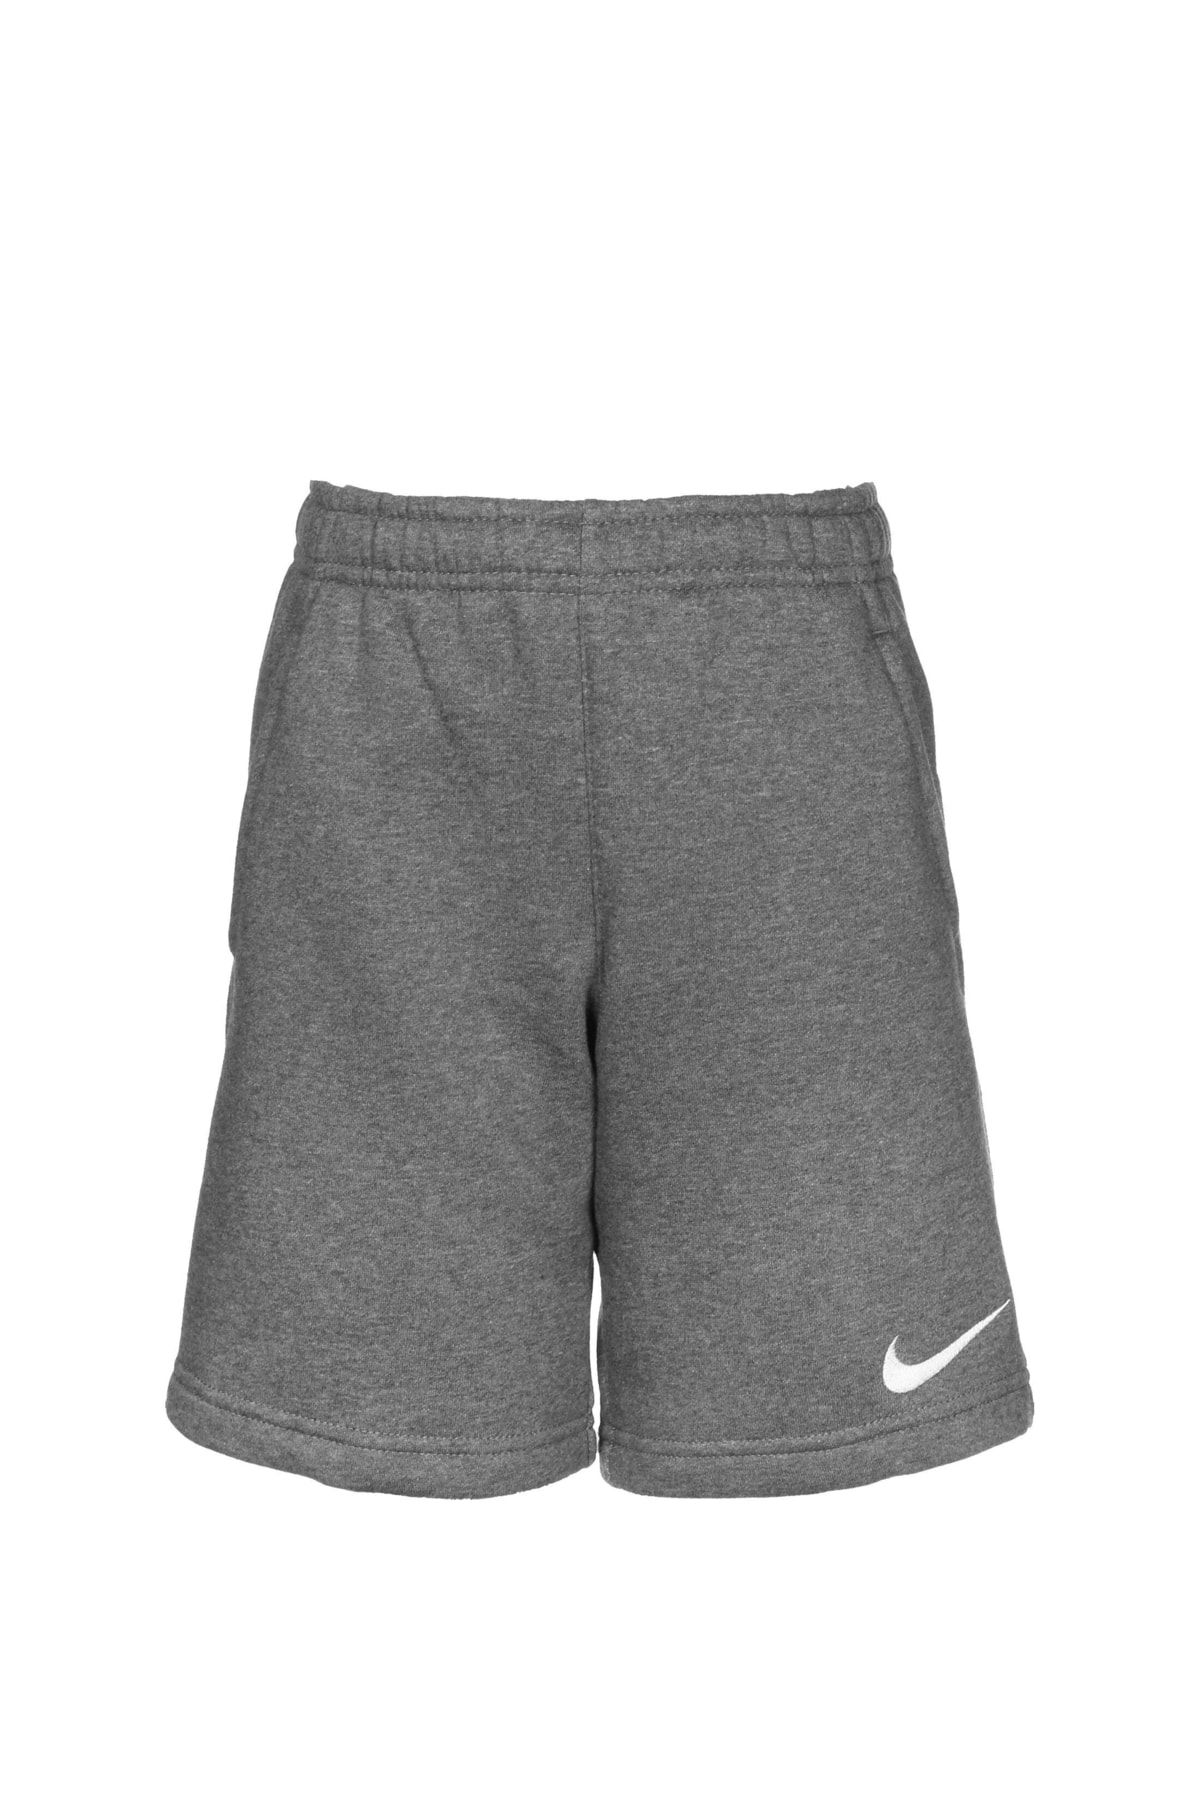 Nike Shorts - Gray - Normal Waist - Trendyol